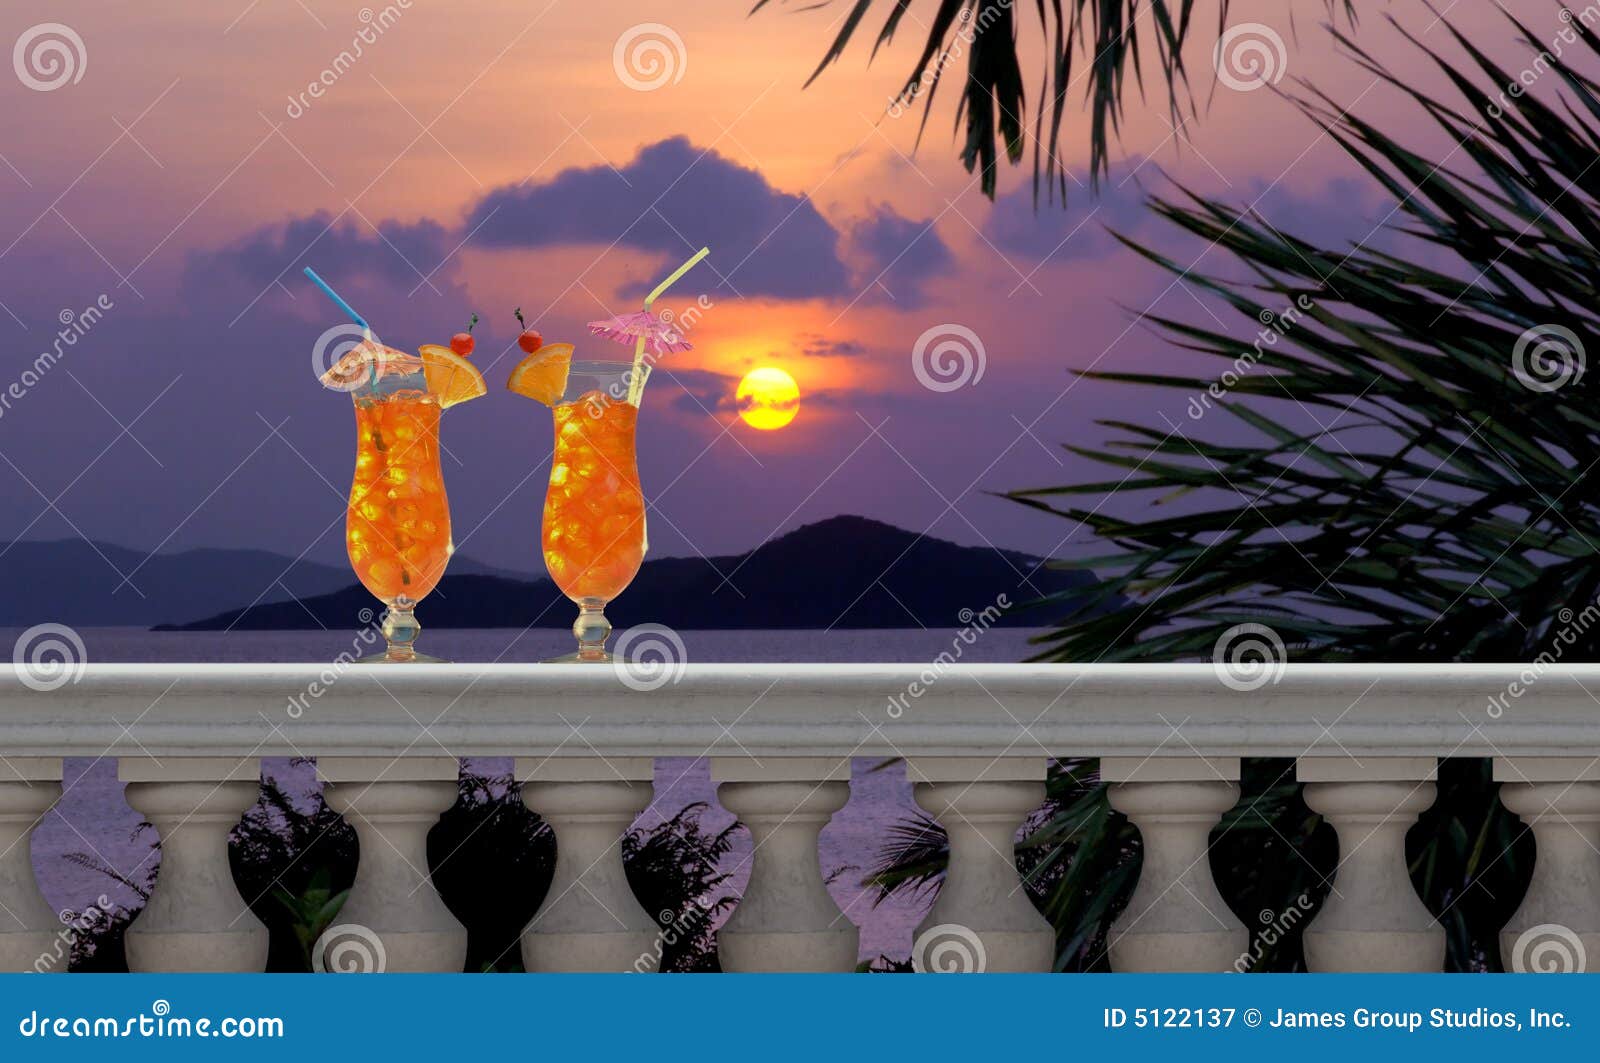 drinks on a tropical balcony